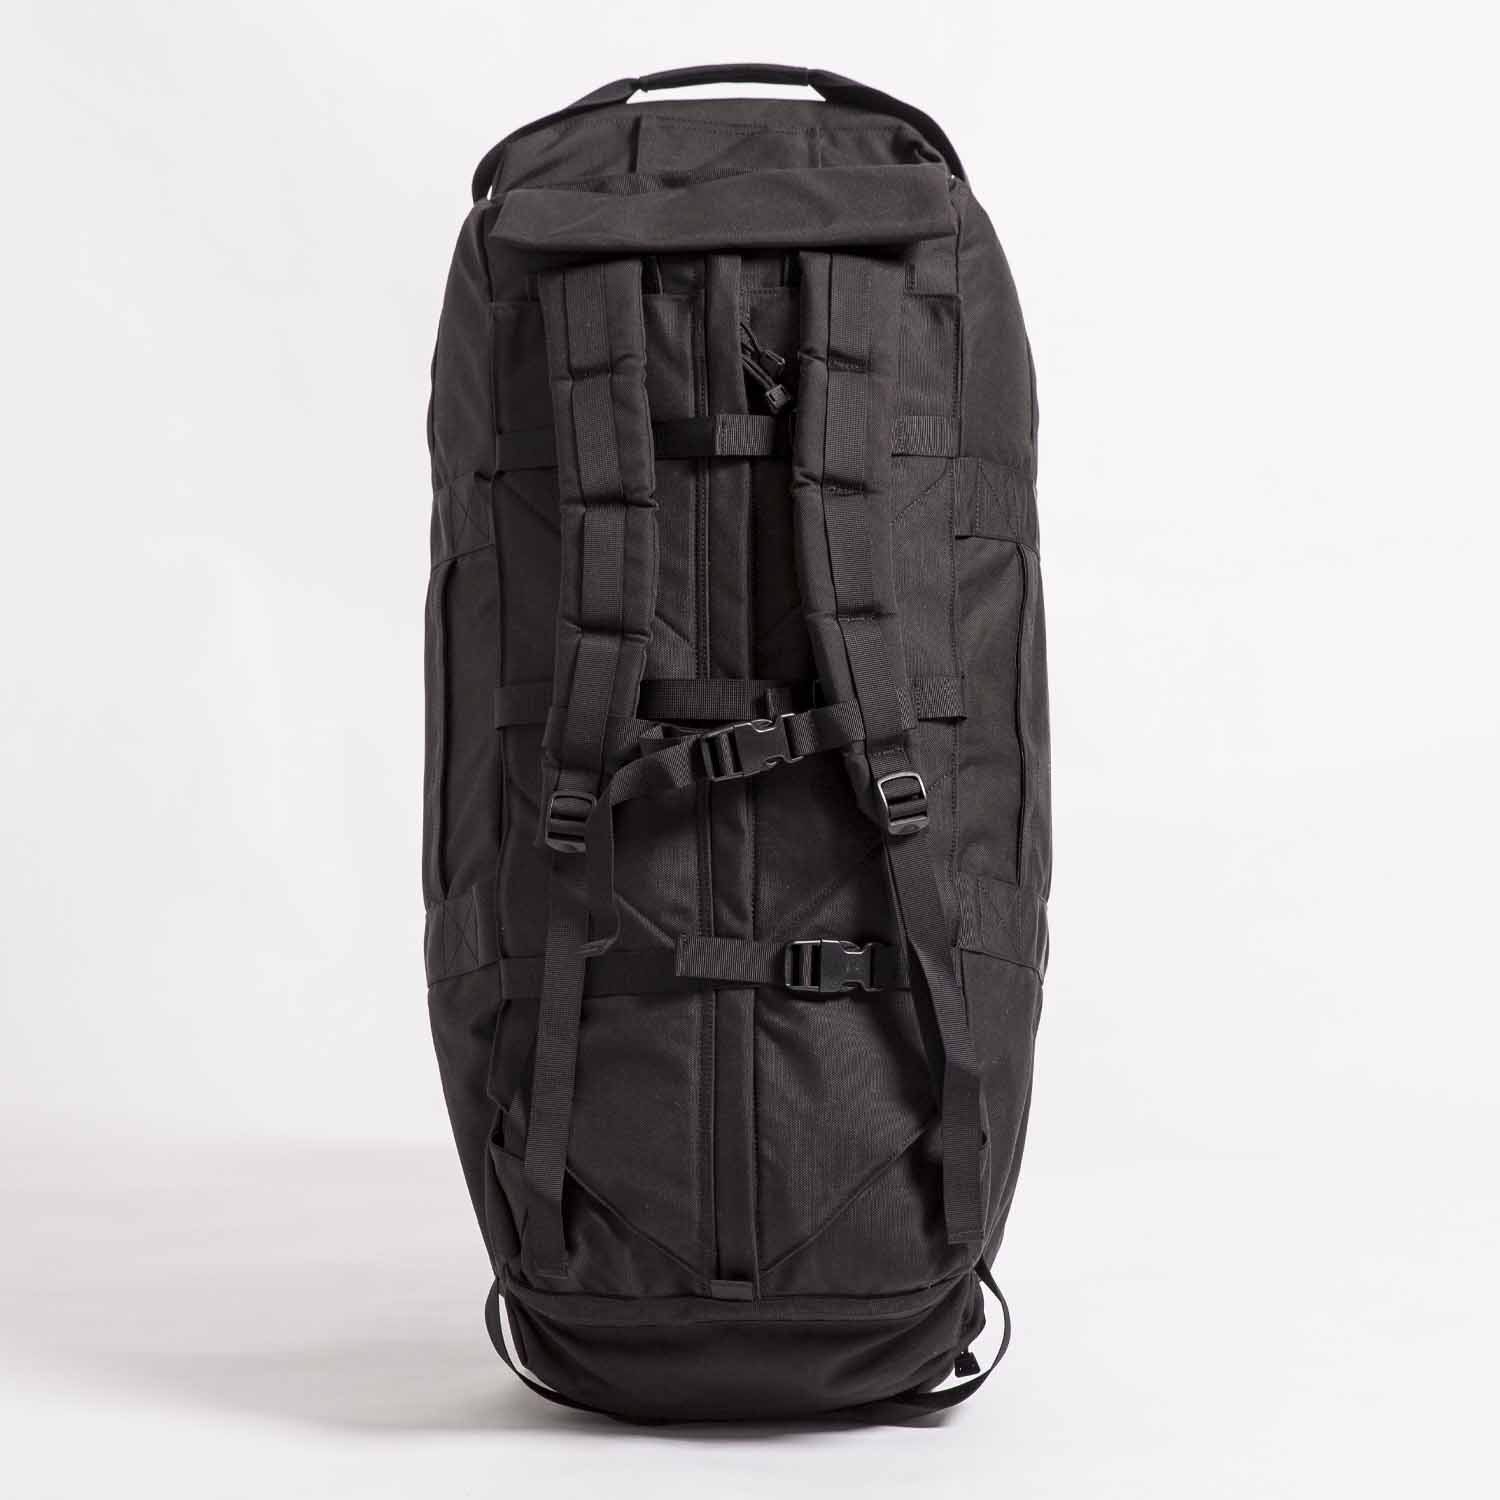 UK MOD Operational Travel Bag - Black